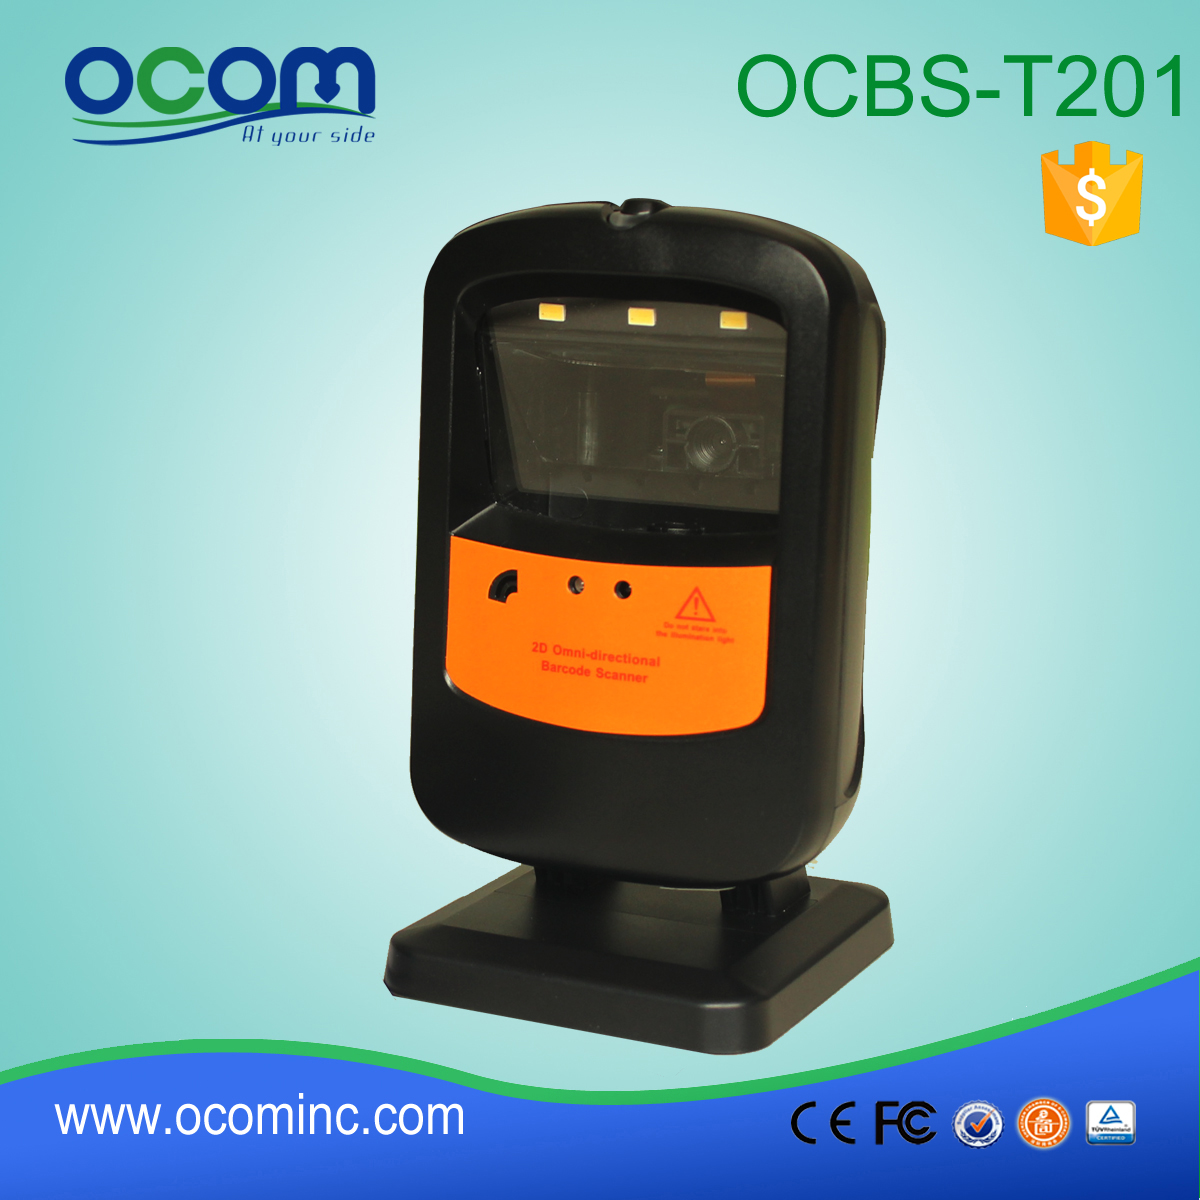 OCBs-T201: Китай RS232 сканер штрих-кода, сканер штрих-кода дешевым